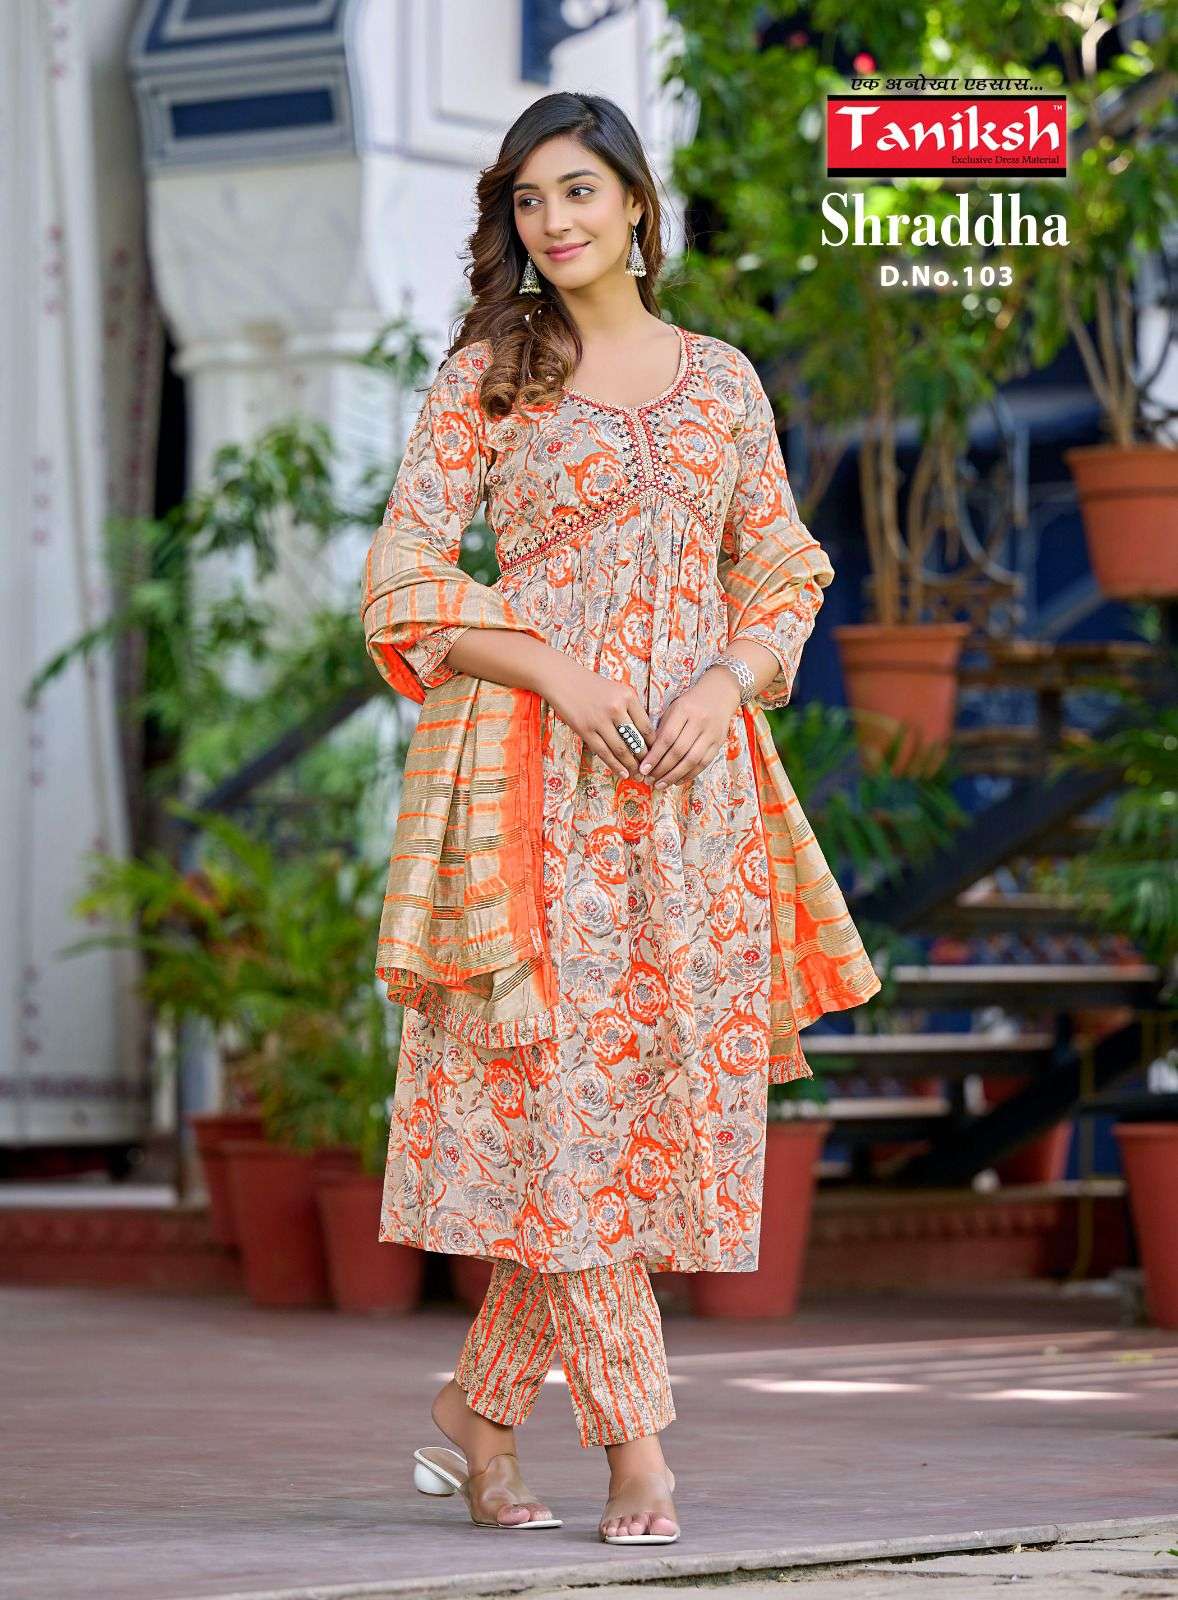 taniksh shraddha 101-108 series latest designer readymade designer salwar suits catalogue design 2023